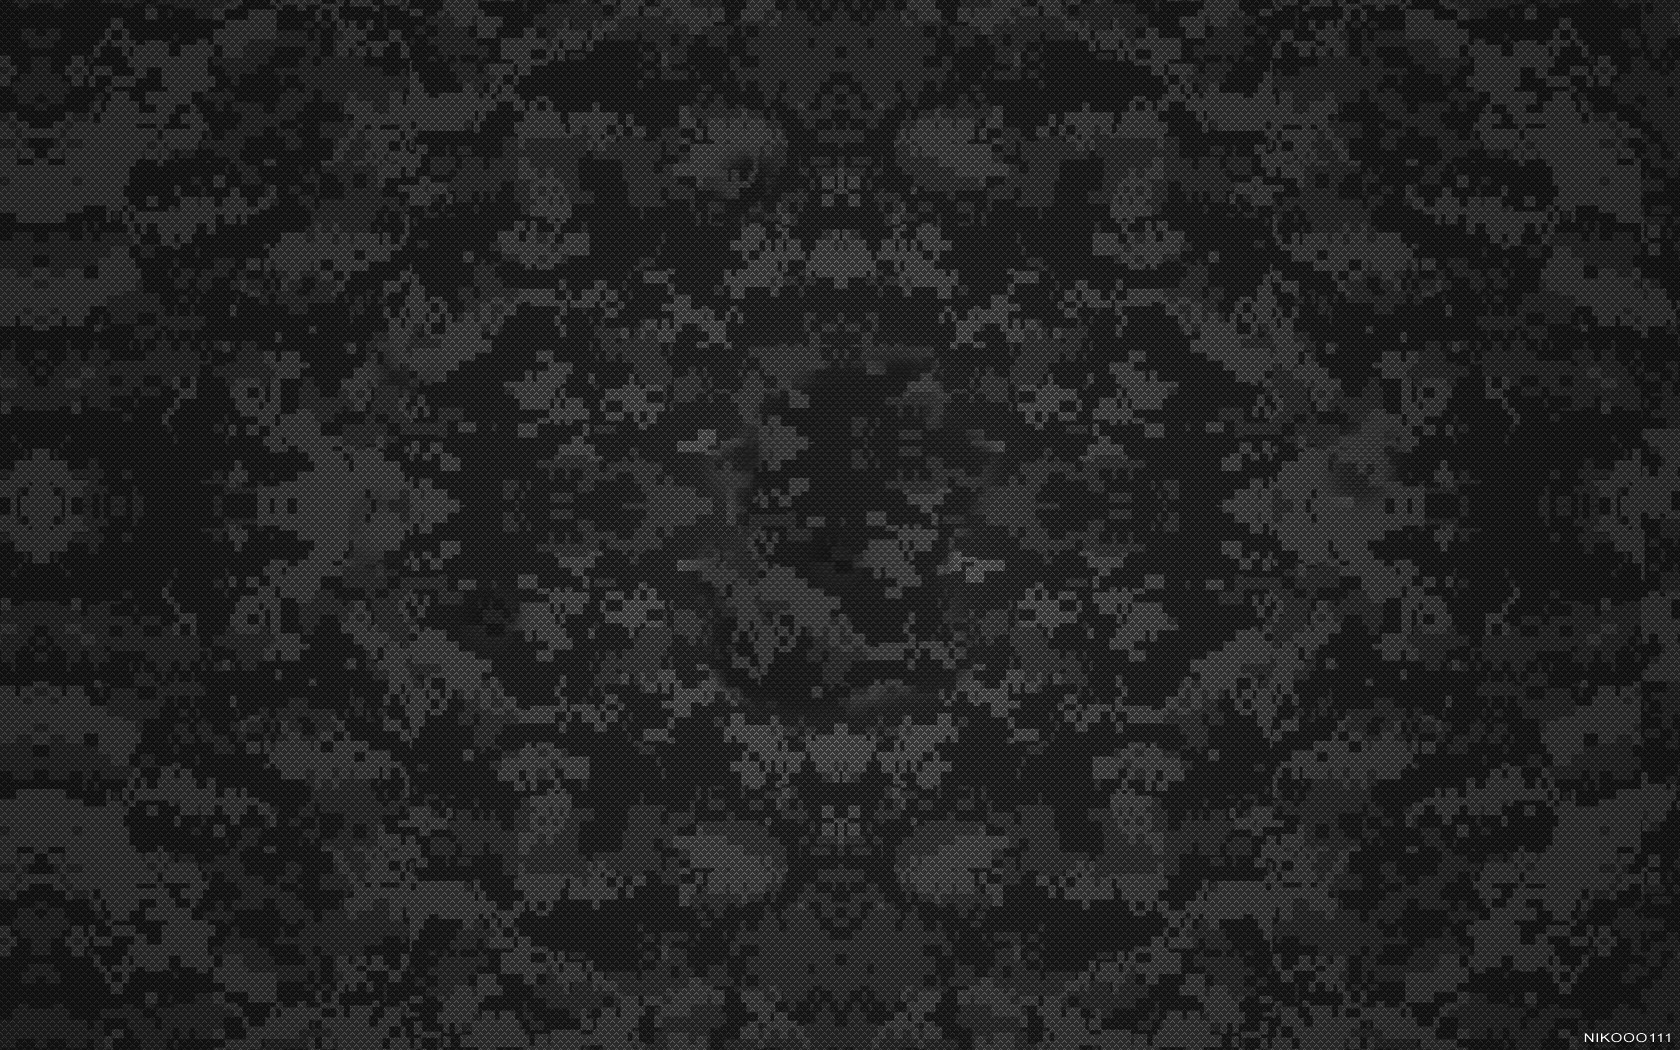 General 1680x1050 camouflage abstract texture pattern gray black dark dark gray watermarked digital art